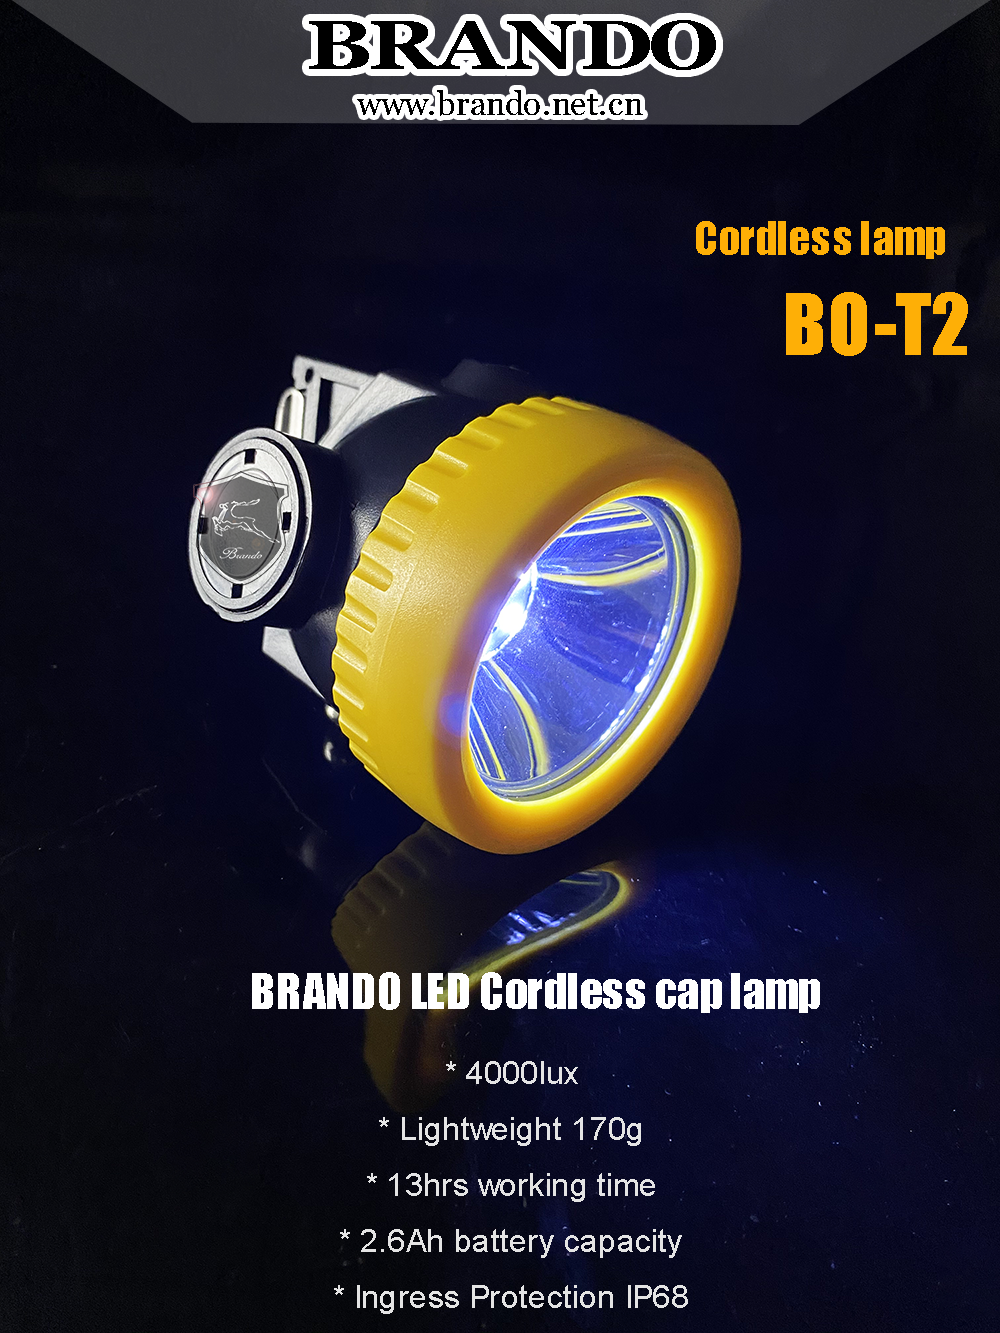 BRANDO lightweight cordless cap lamp BO T2